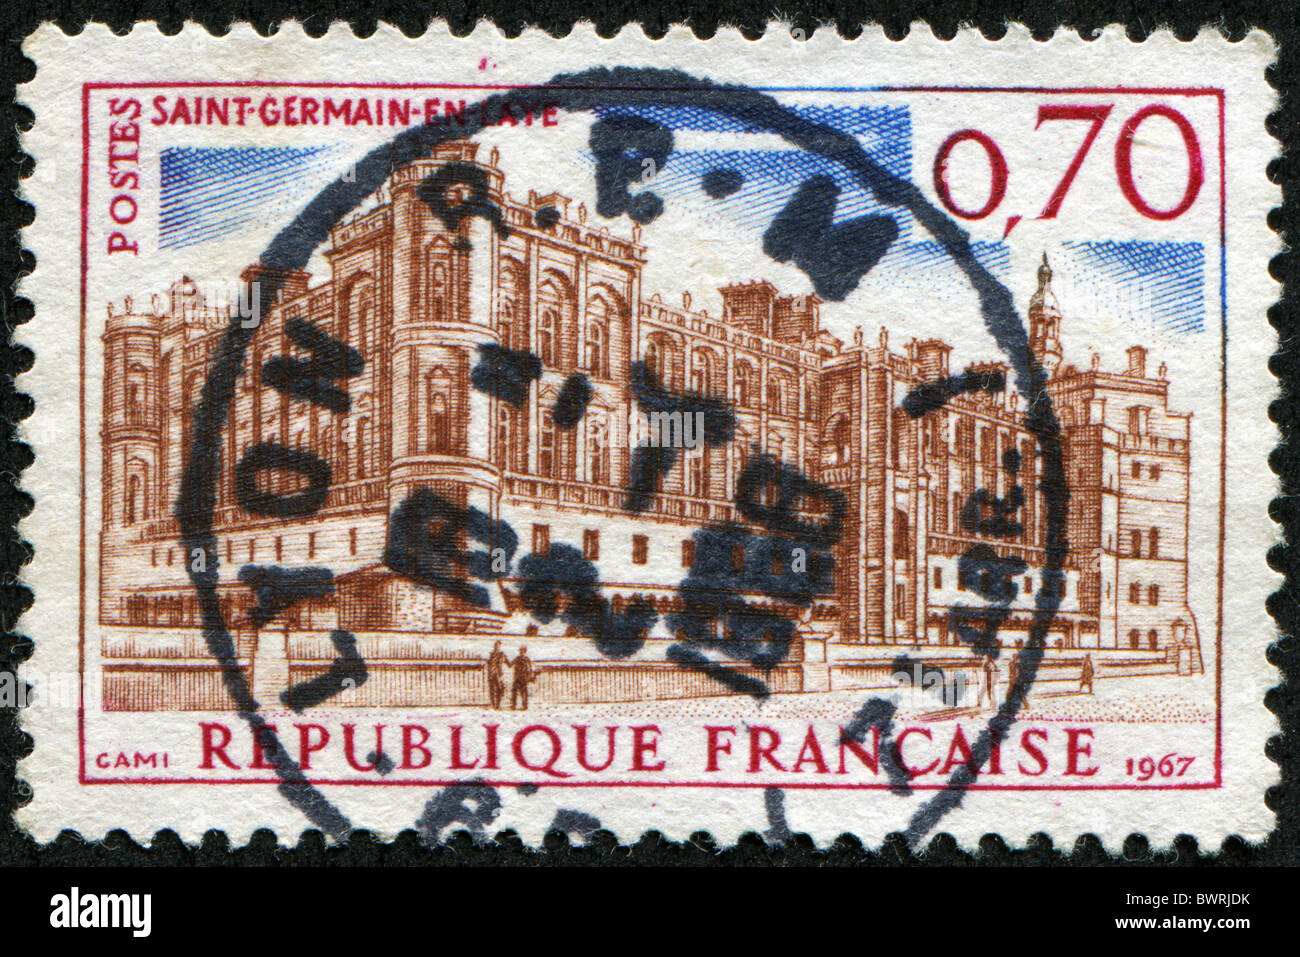 FRANCE - CIRCA 1967: A stamp printed in France shows Saint Germain en Laye, circa 1967 Stock Photo